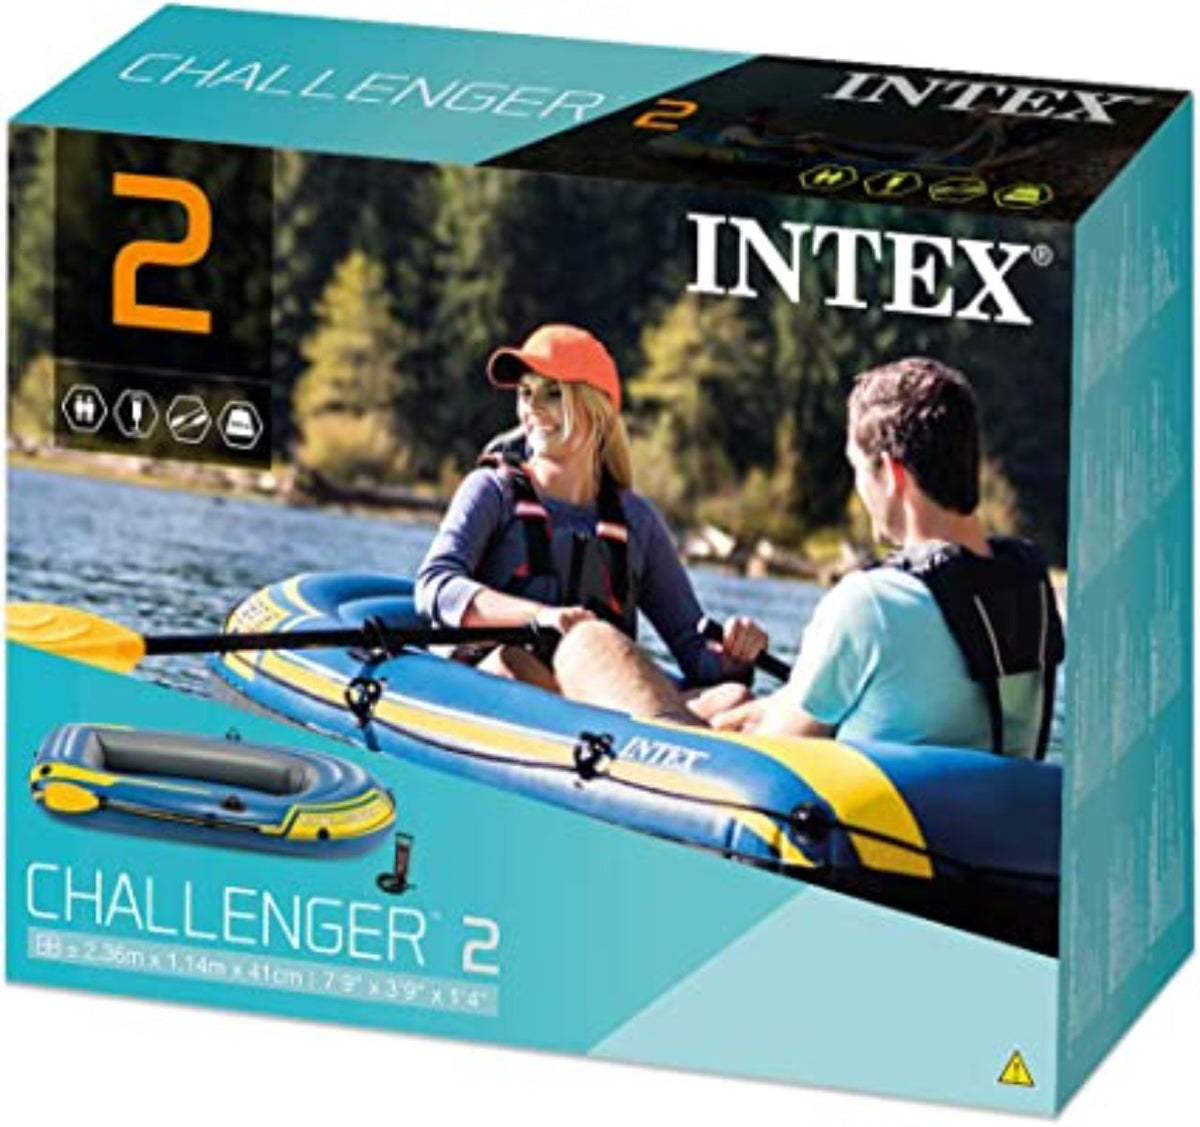 Intex Bote Challenger 2 Set